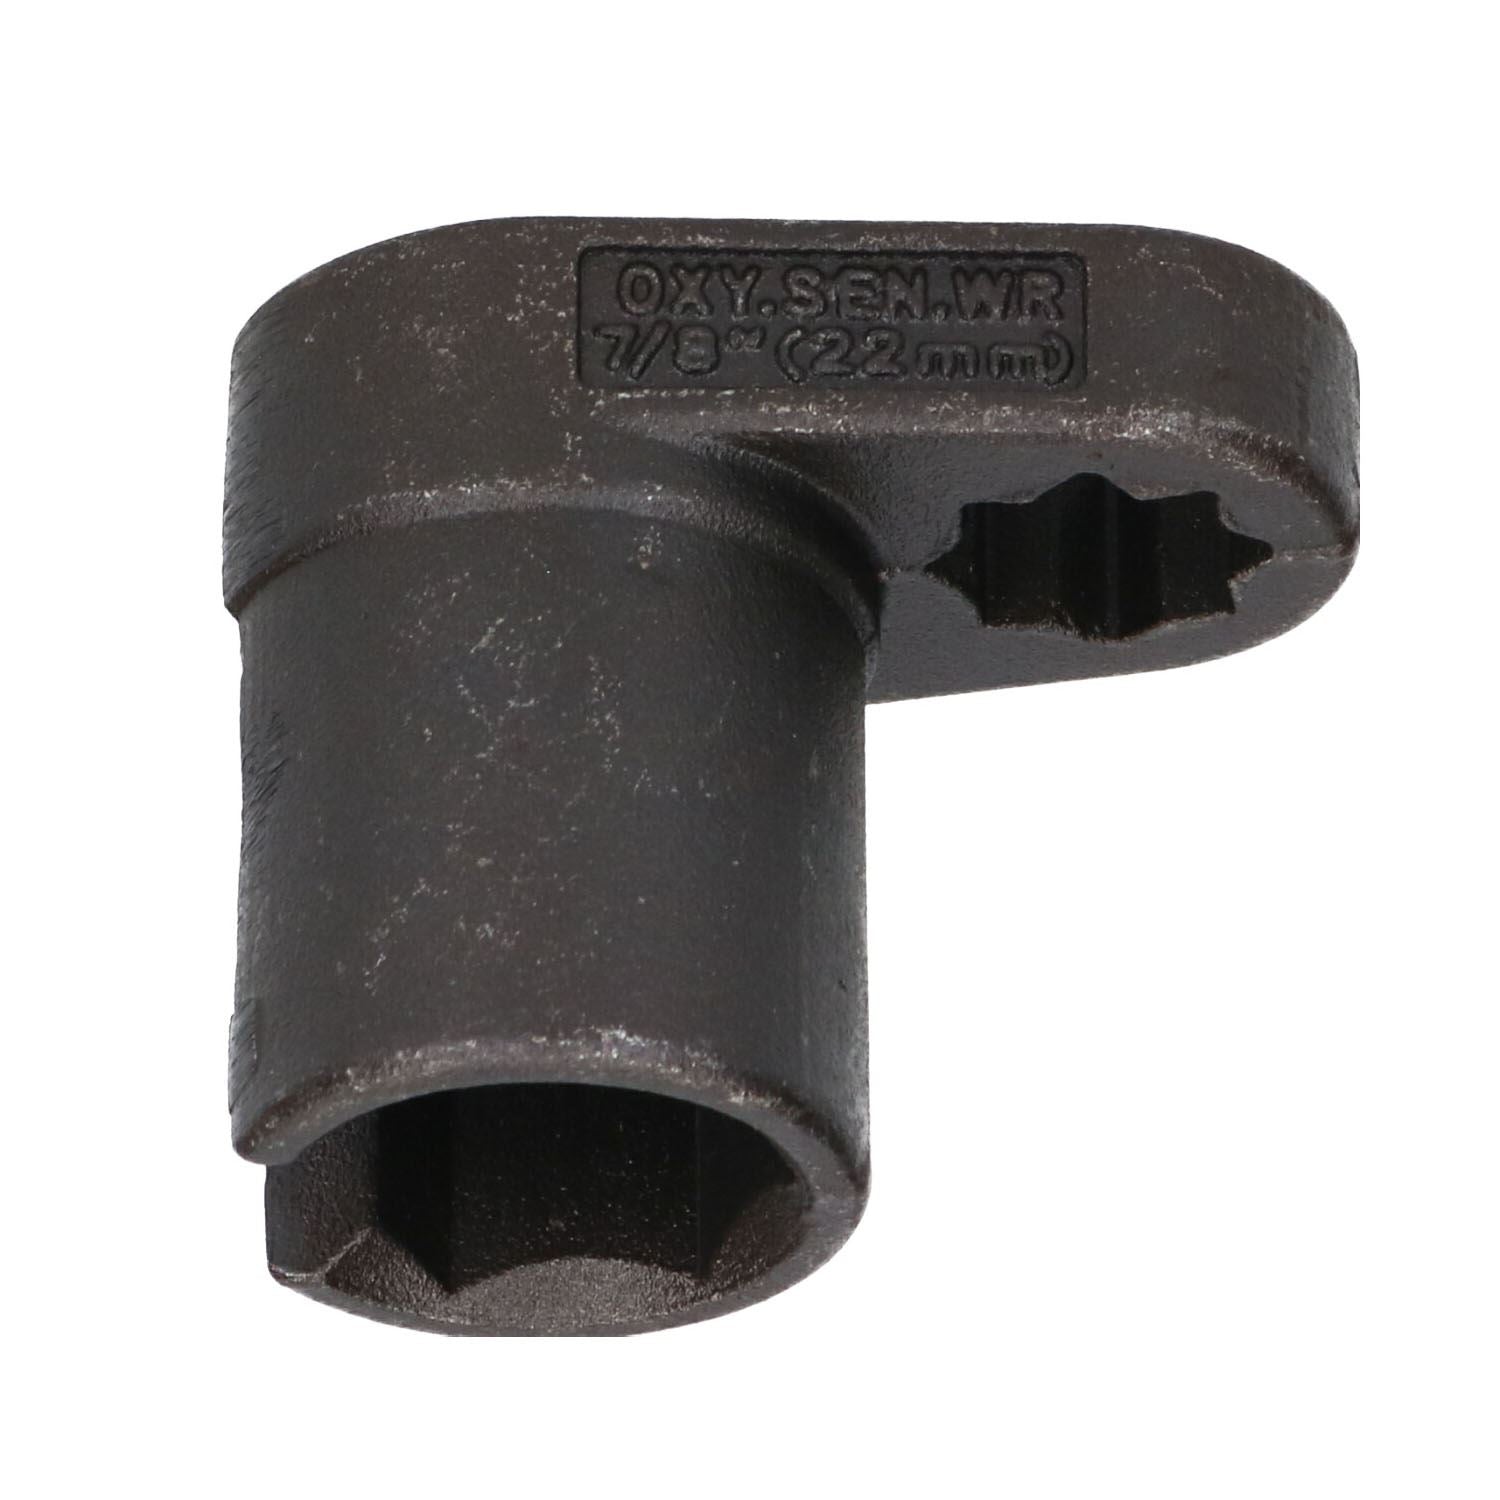 22mm 7/8" Oxygen Sensor Wrench Offset Socket Remover Removal Tool